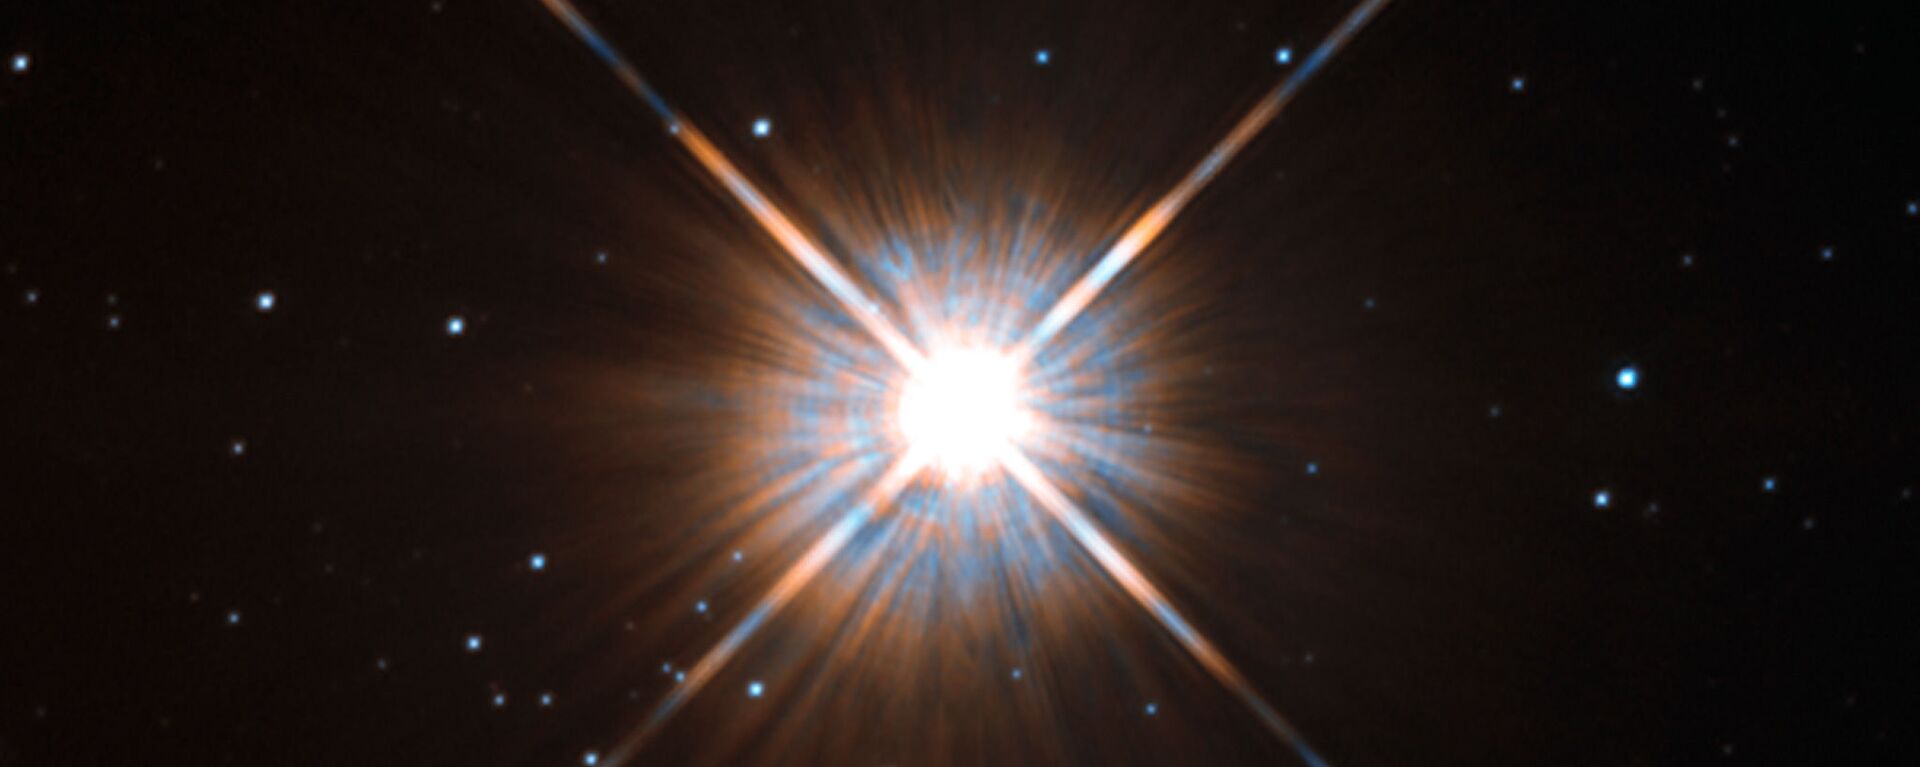 La estrella Próxima Centauri - Sputnik Mundo, 1920, 19.12.2020